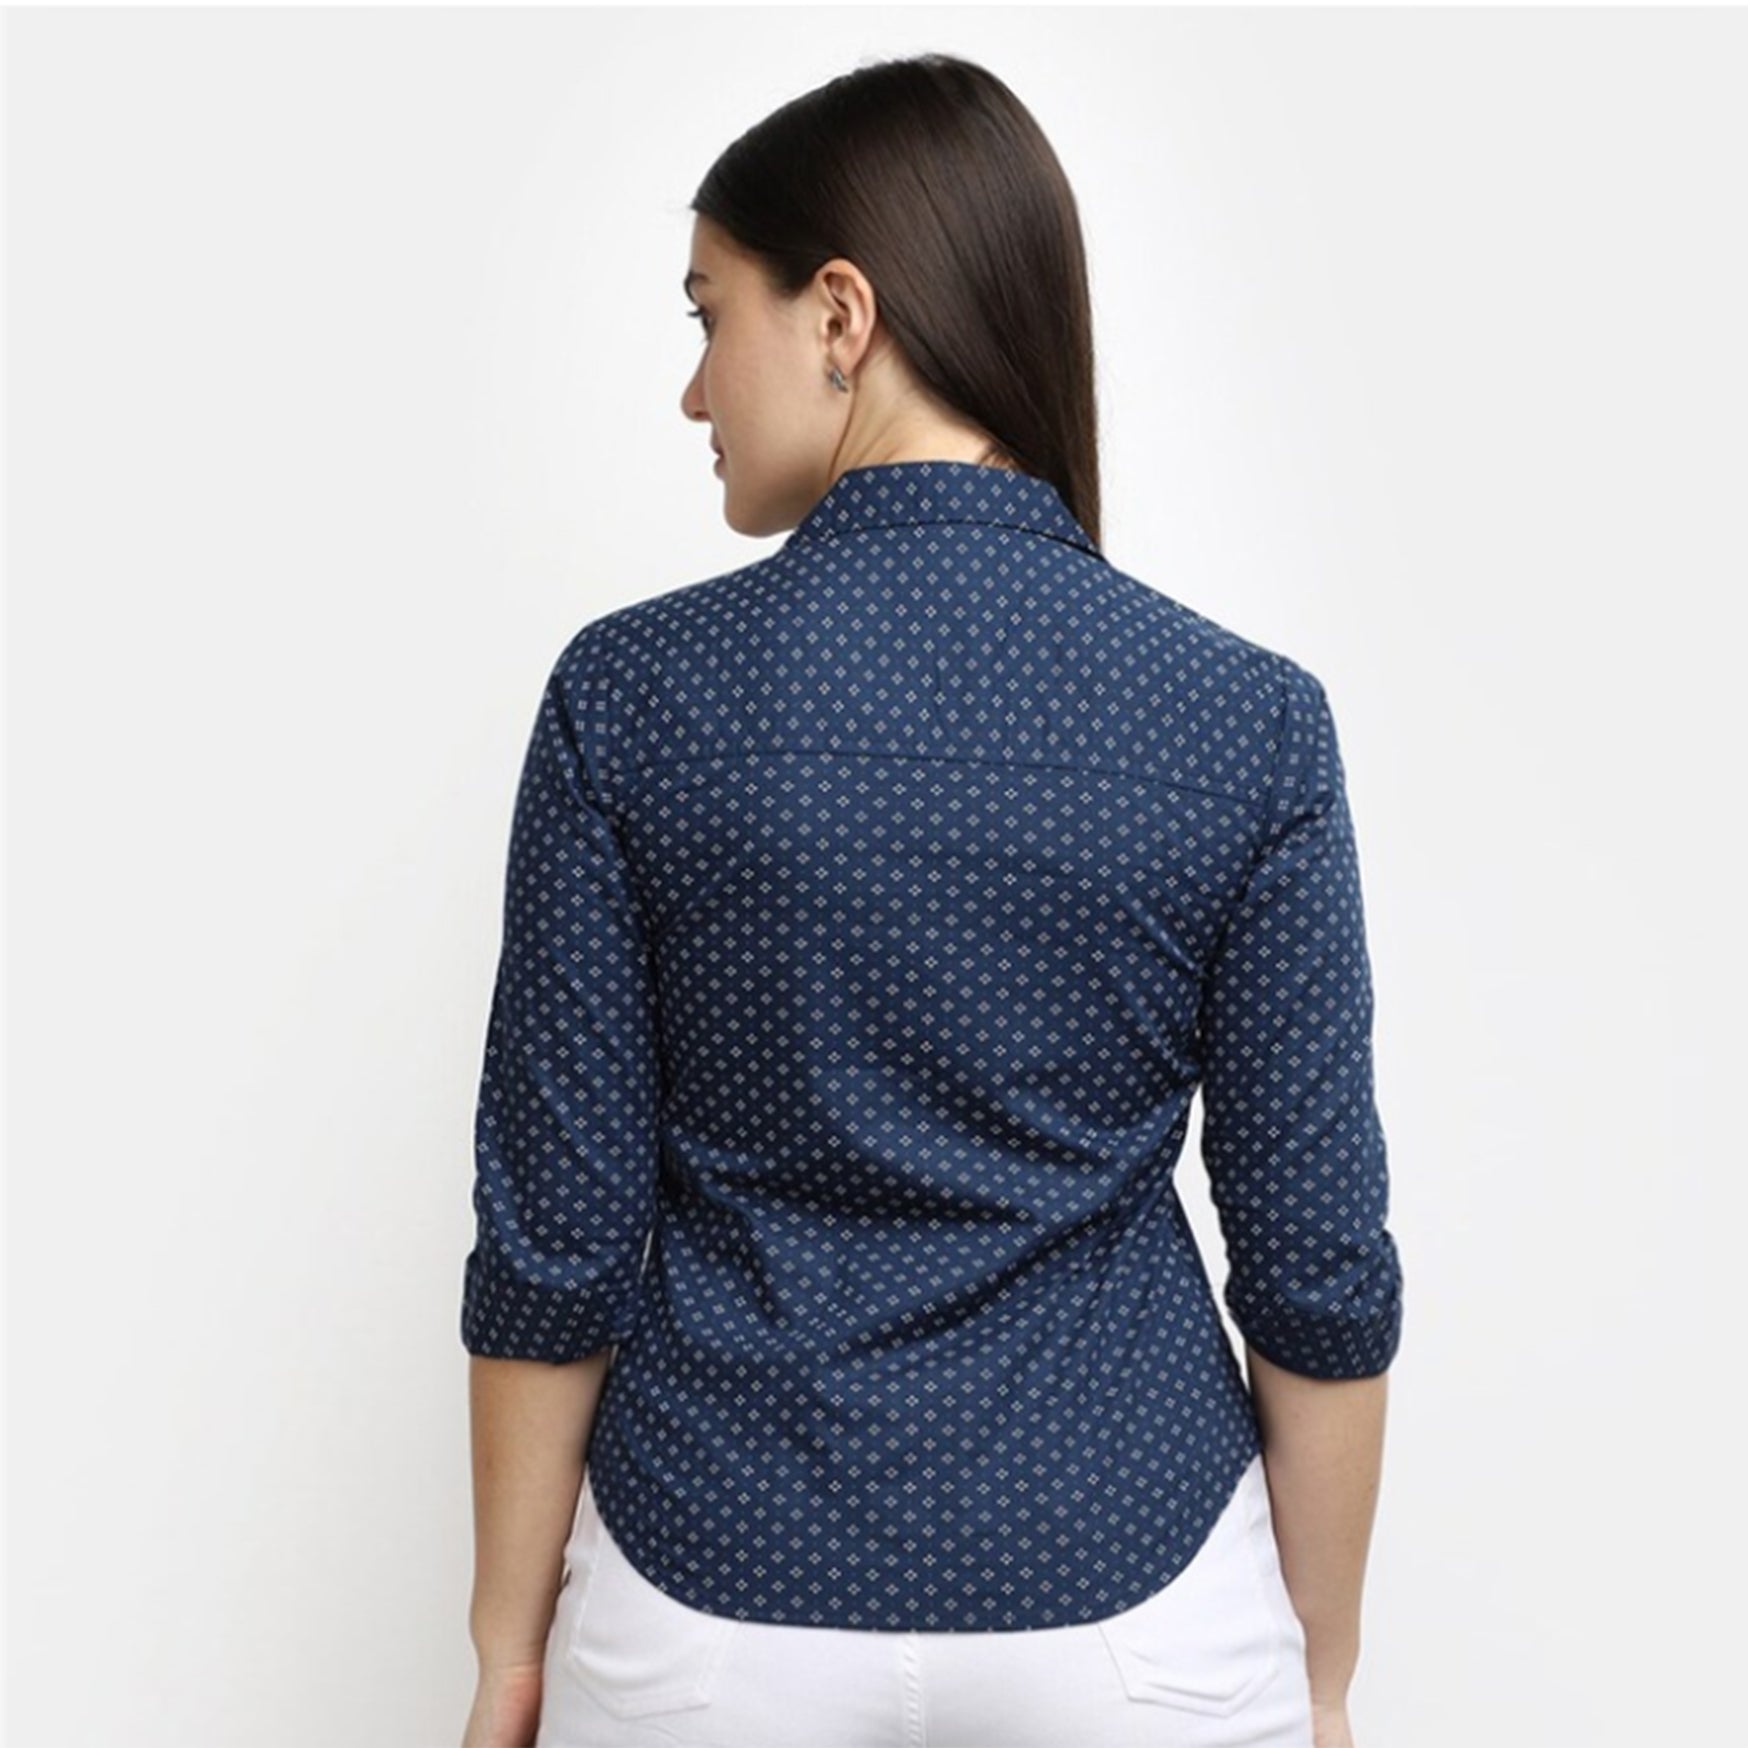 Geometric Printed Cotton Casual Shirt